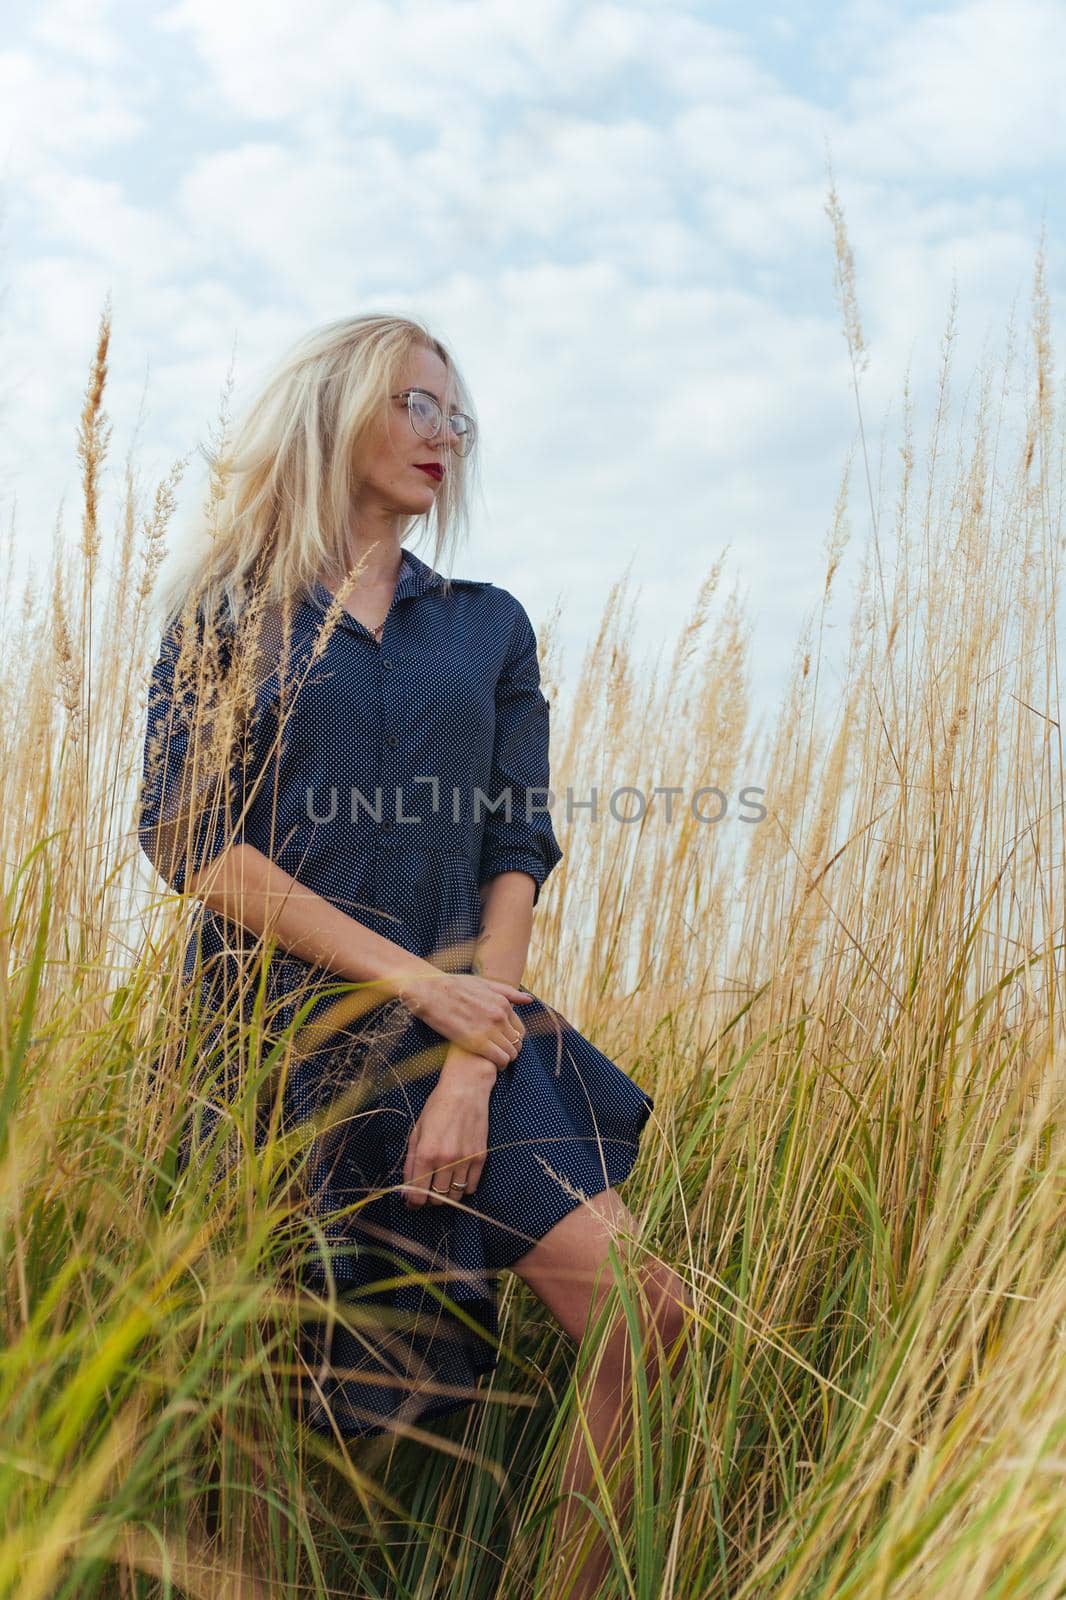 Beautiful girl villager posing in a dress in the field